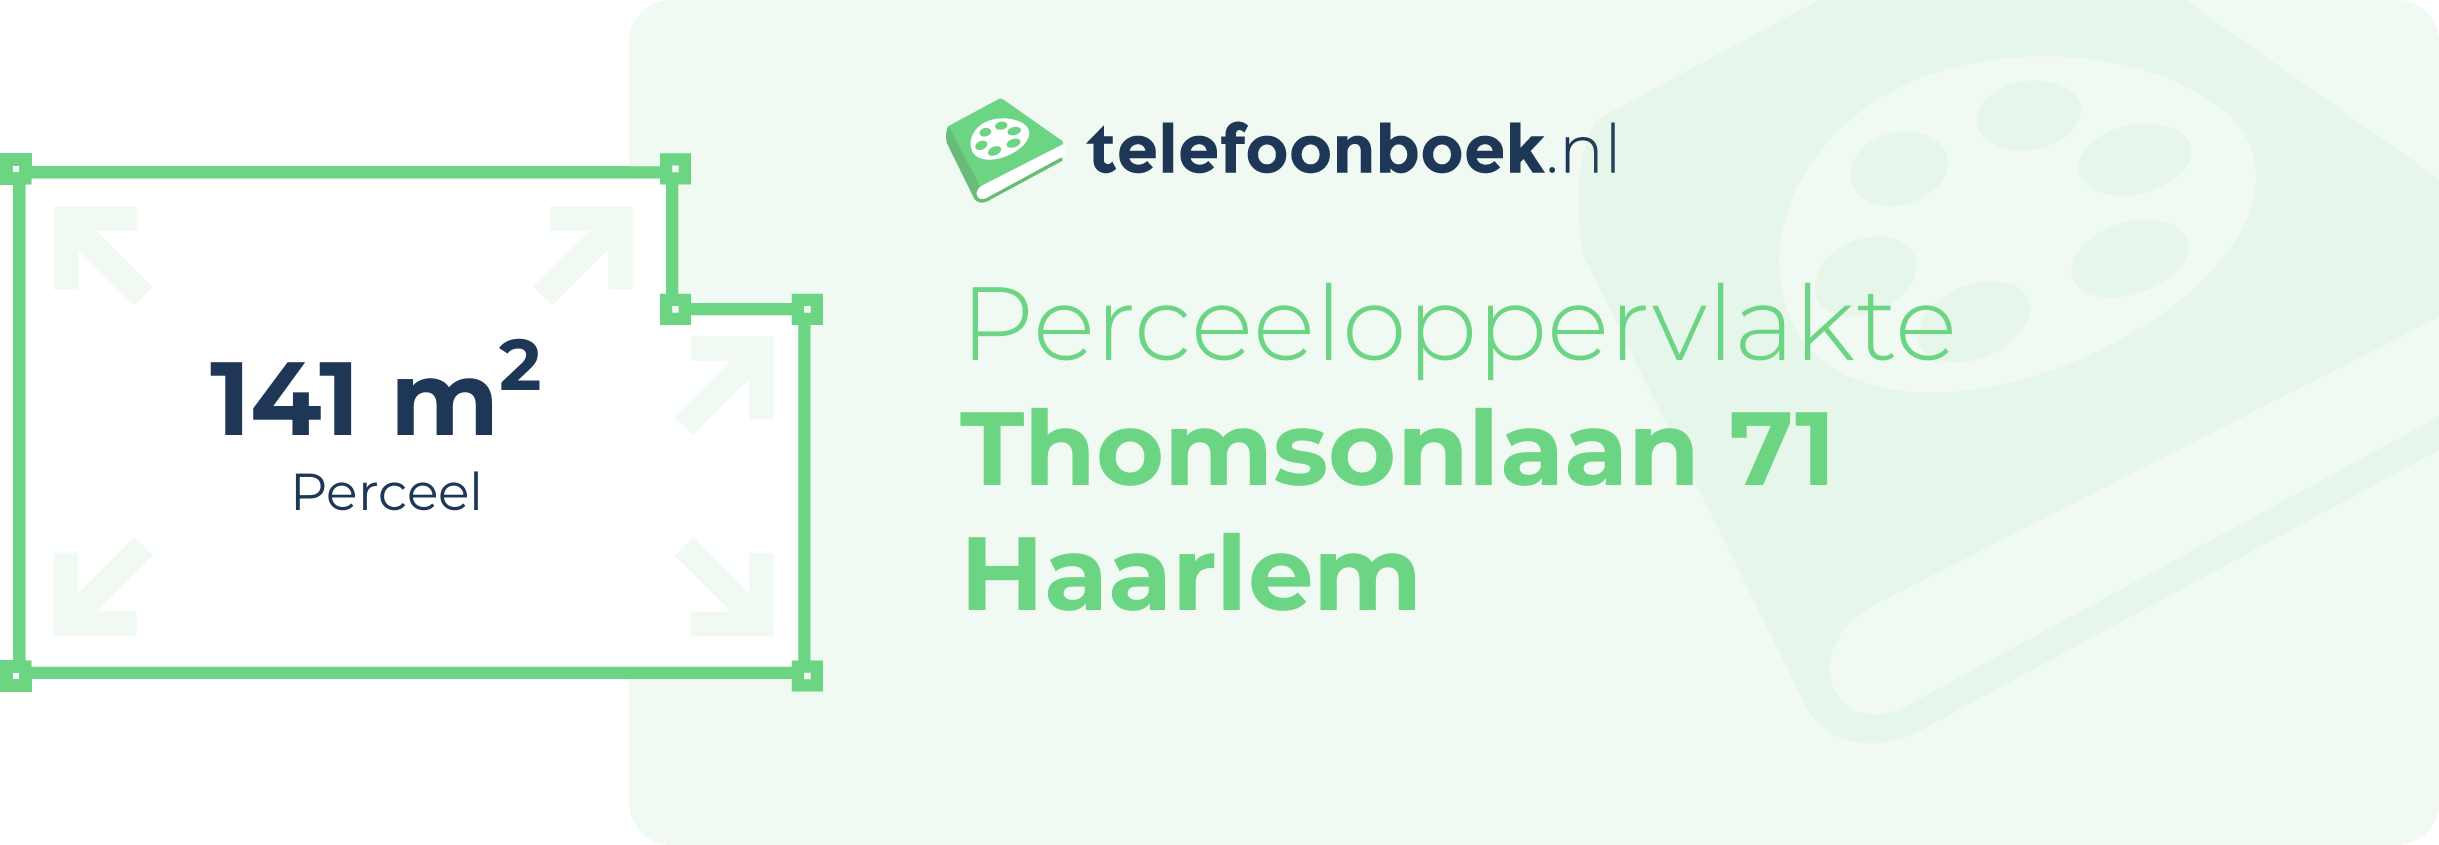 Perceeloppervlakte Thomsonlaan 71 Haarlem